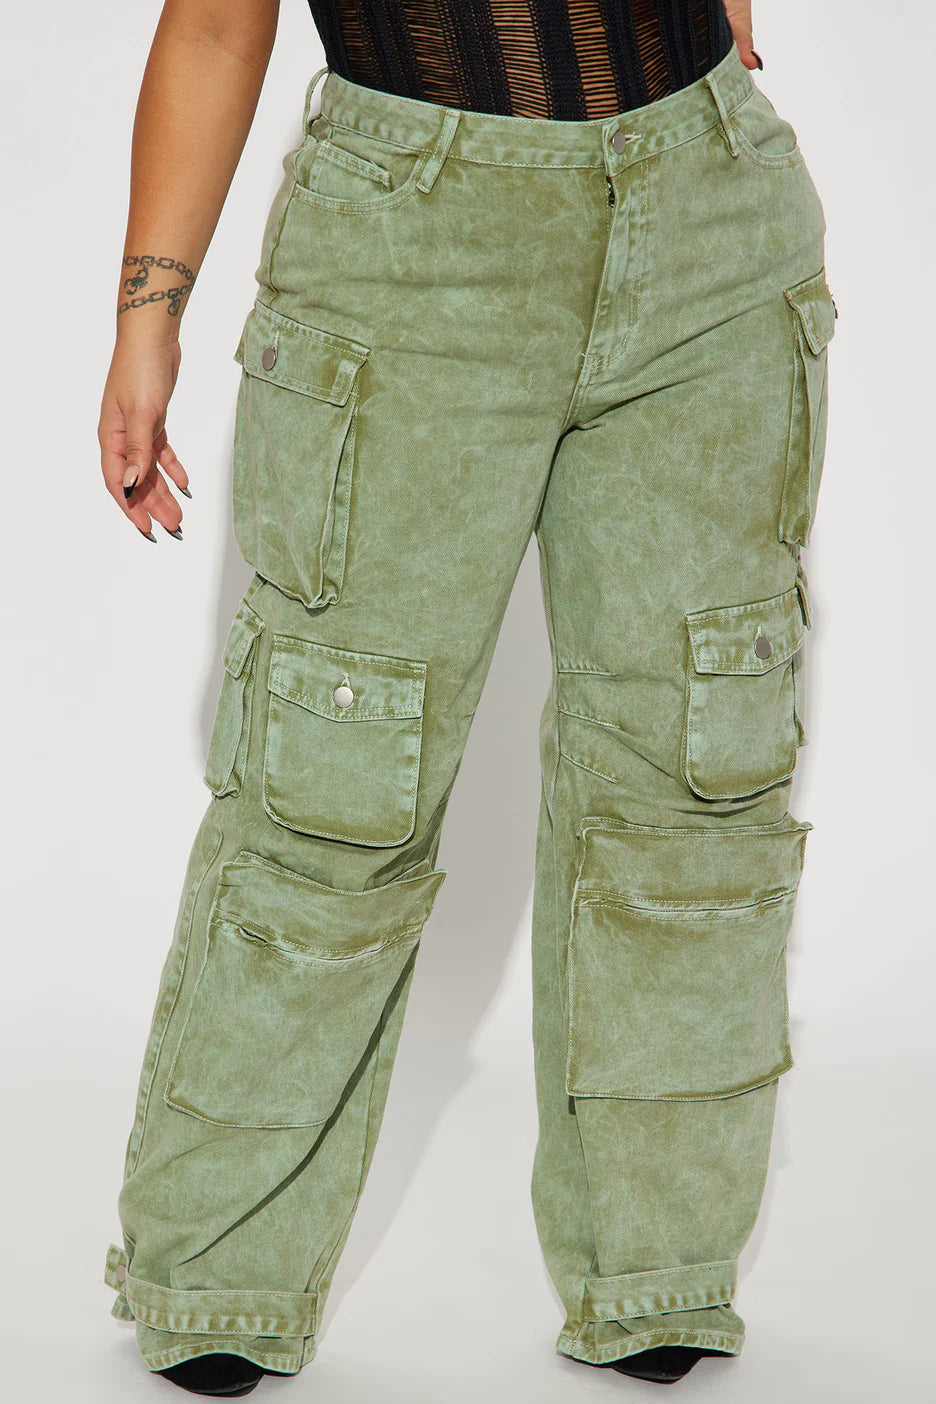 Fashionnova Billie Low Slung Cargo Jeans